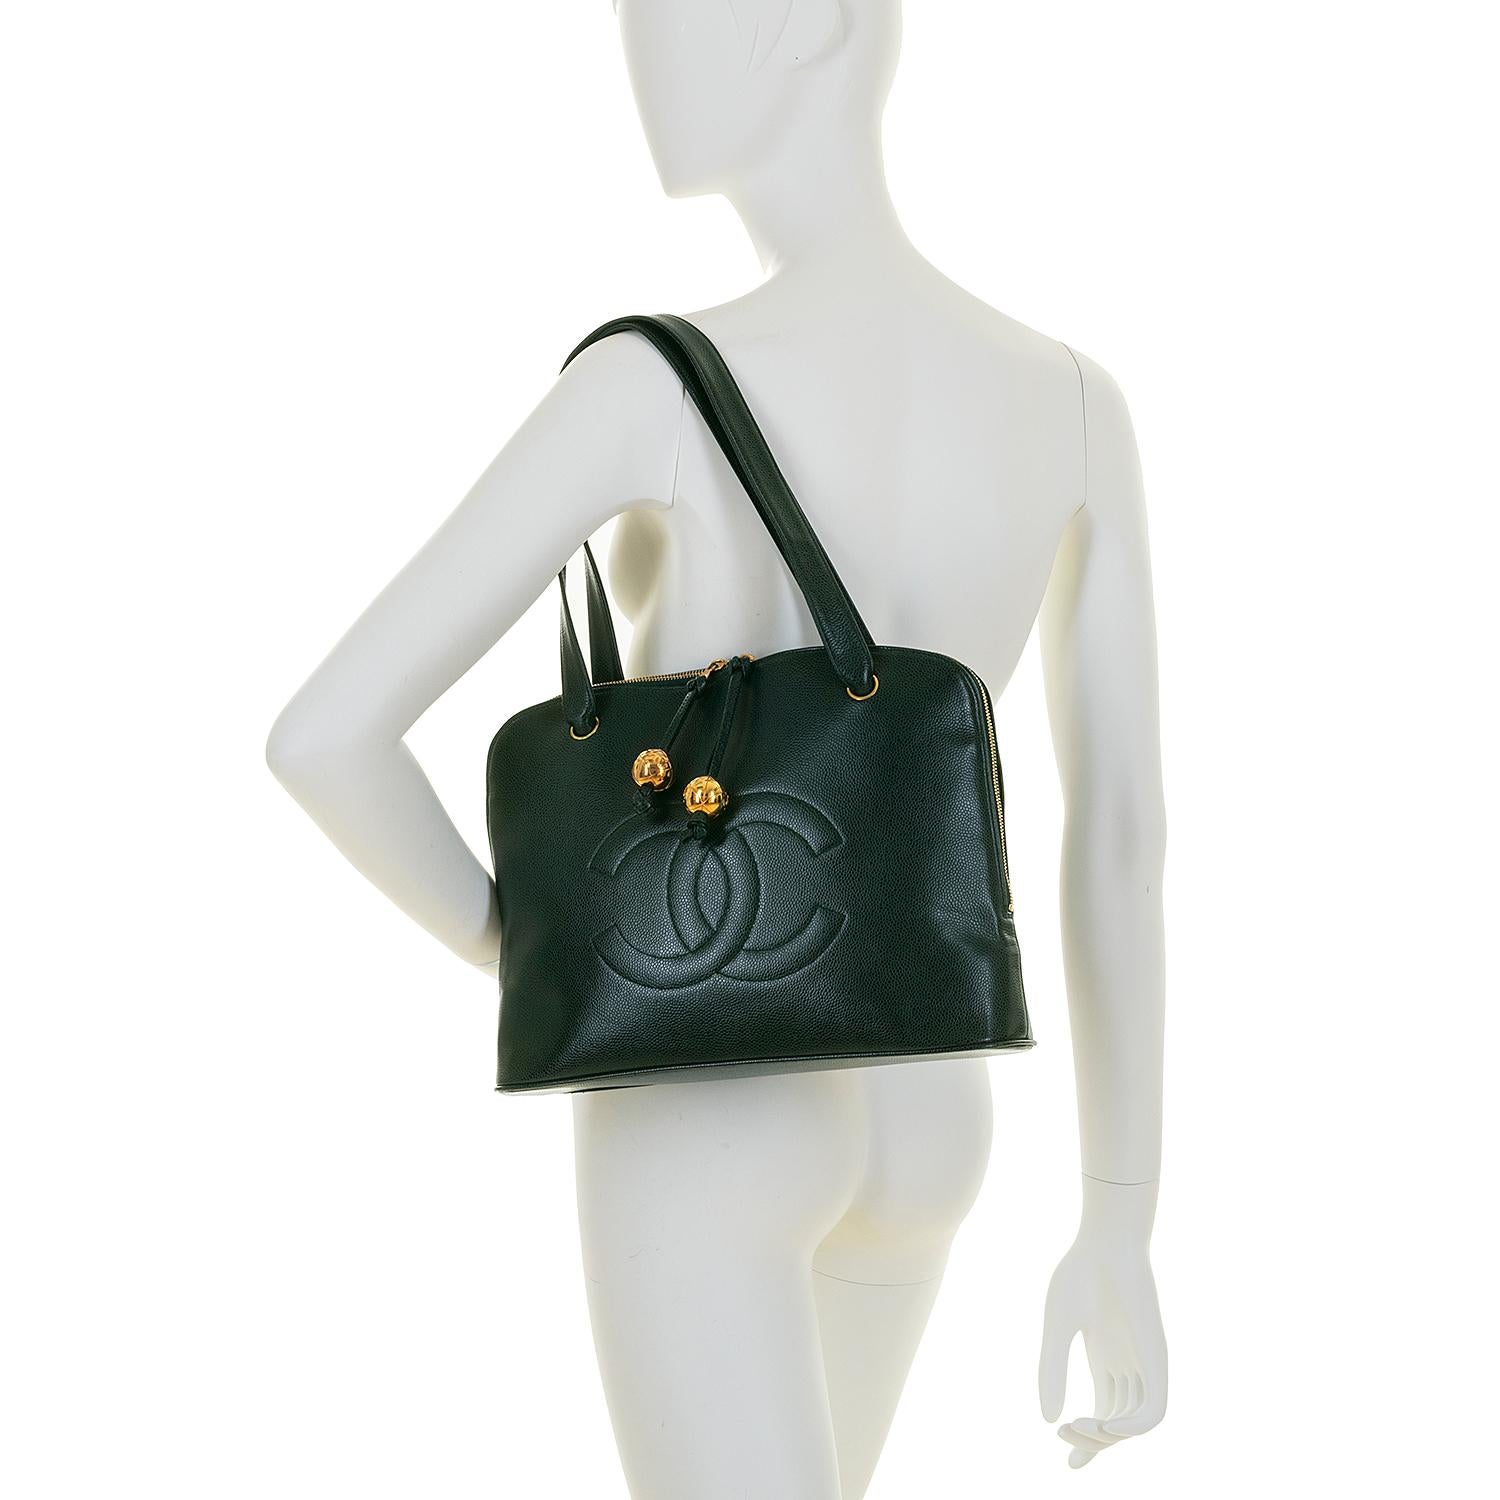 Chanel 'Vert Emerald' Caviar  Shoulder Bag- Iconic 'CC' Globes - Pristine - Rare For Sale 1